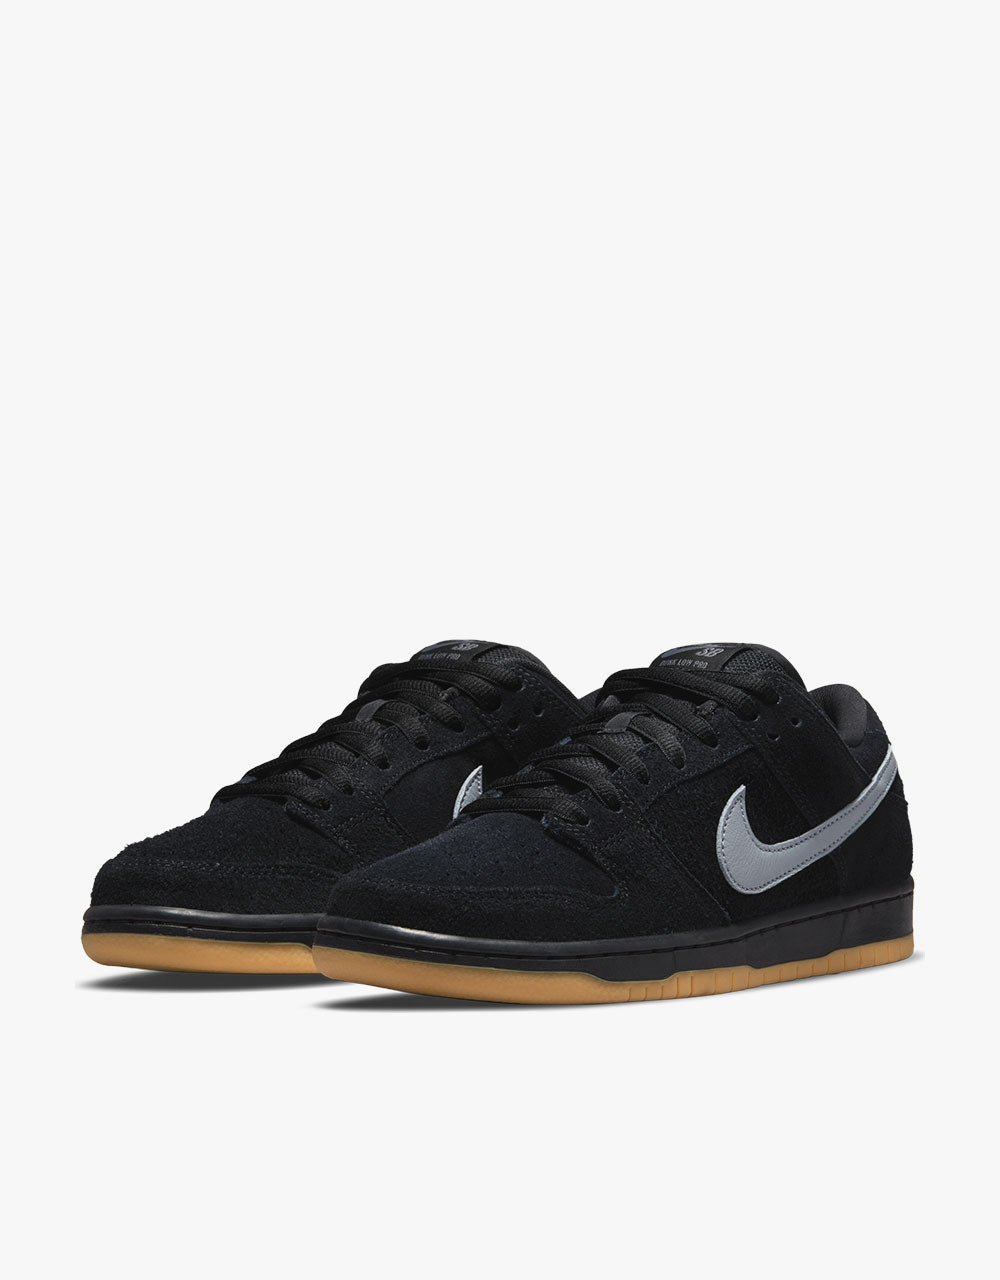 Nike SB Dunk Low Pro Skate Shoes - Black/Cool Grey-Black-Black